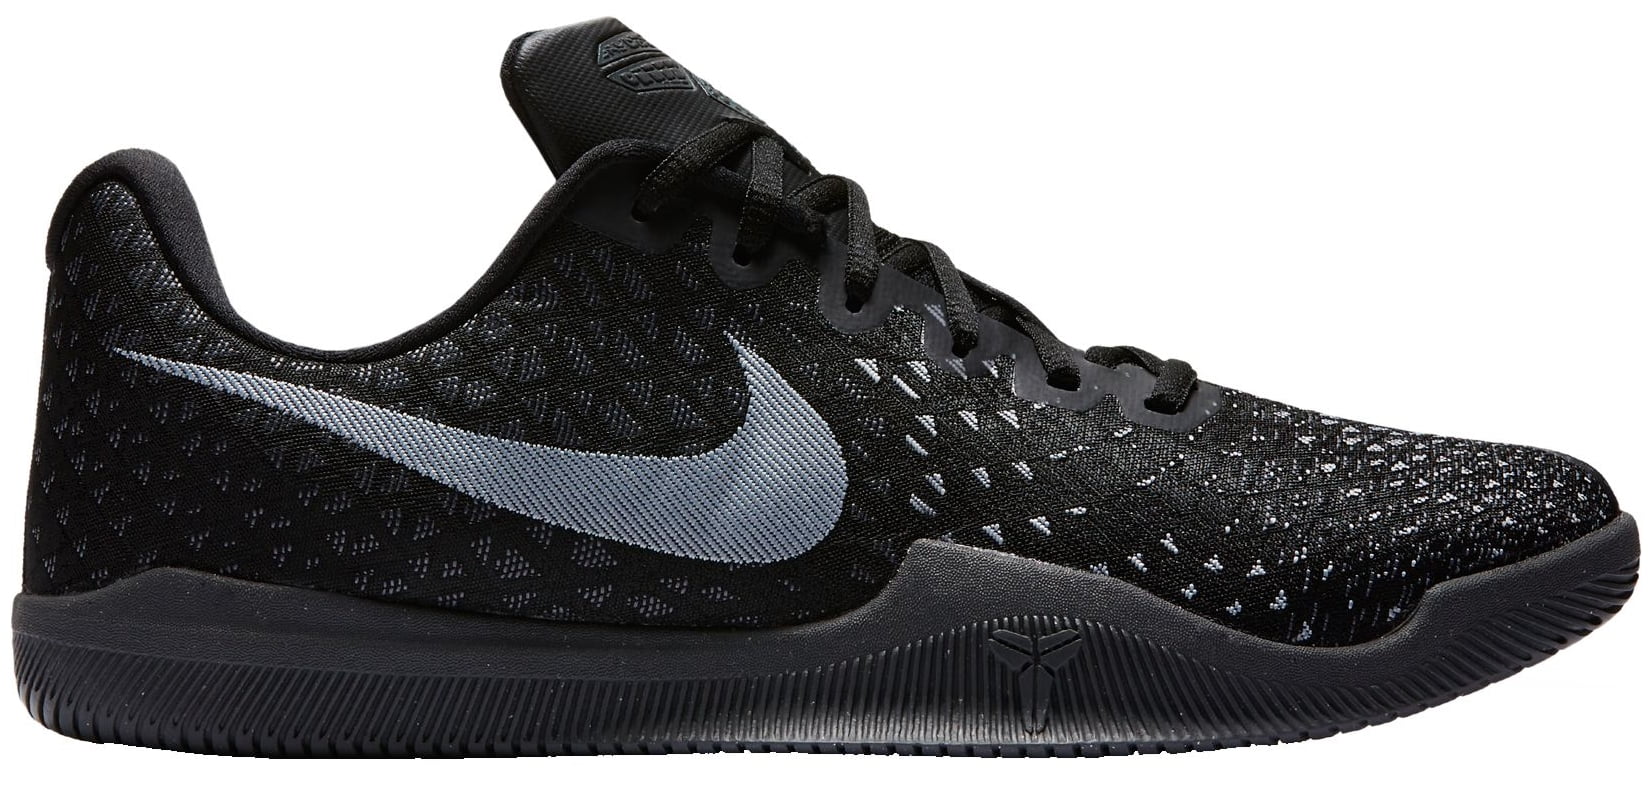 Nike Men's Kobe Instinct Basketball Shoes - Grey/Black - 12.0 - Walmart.com